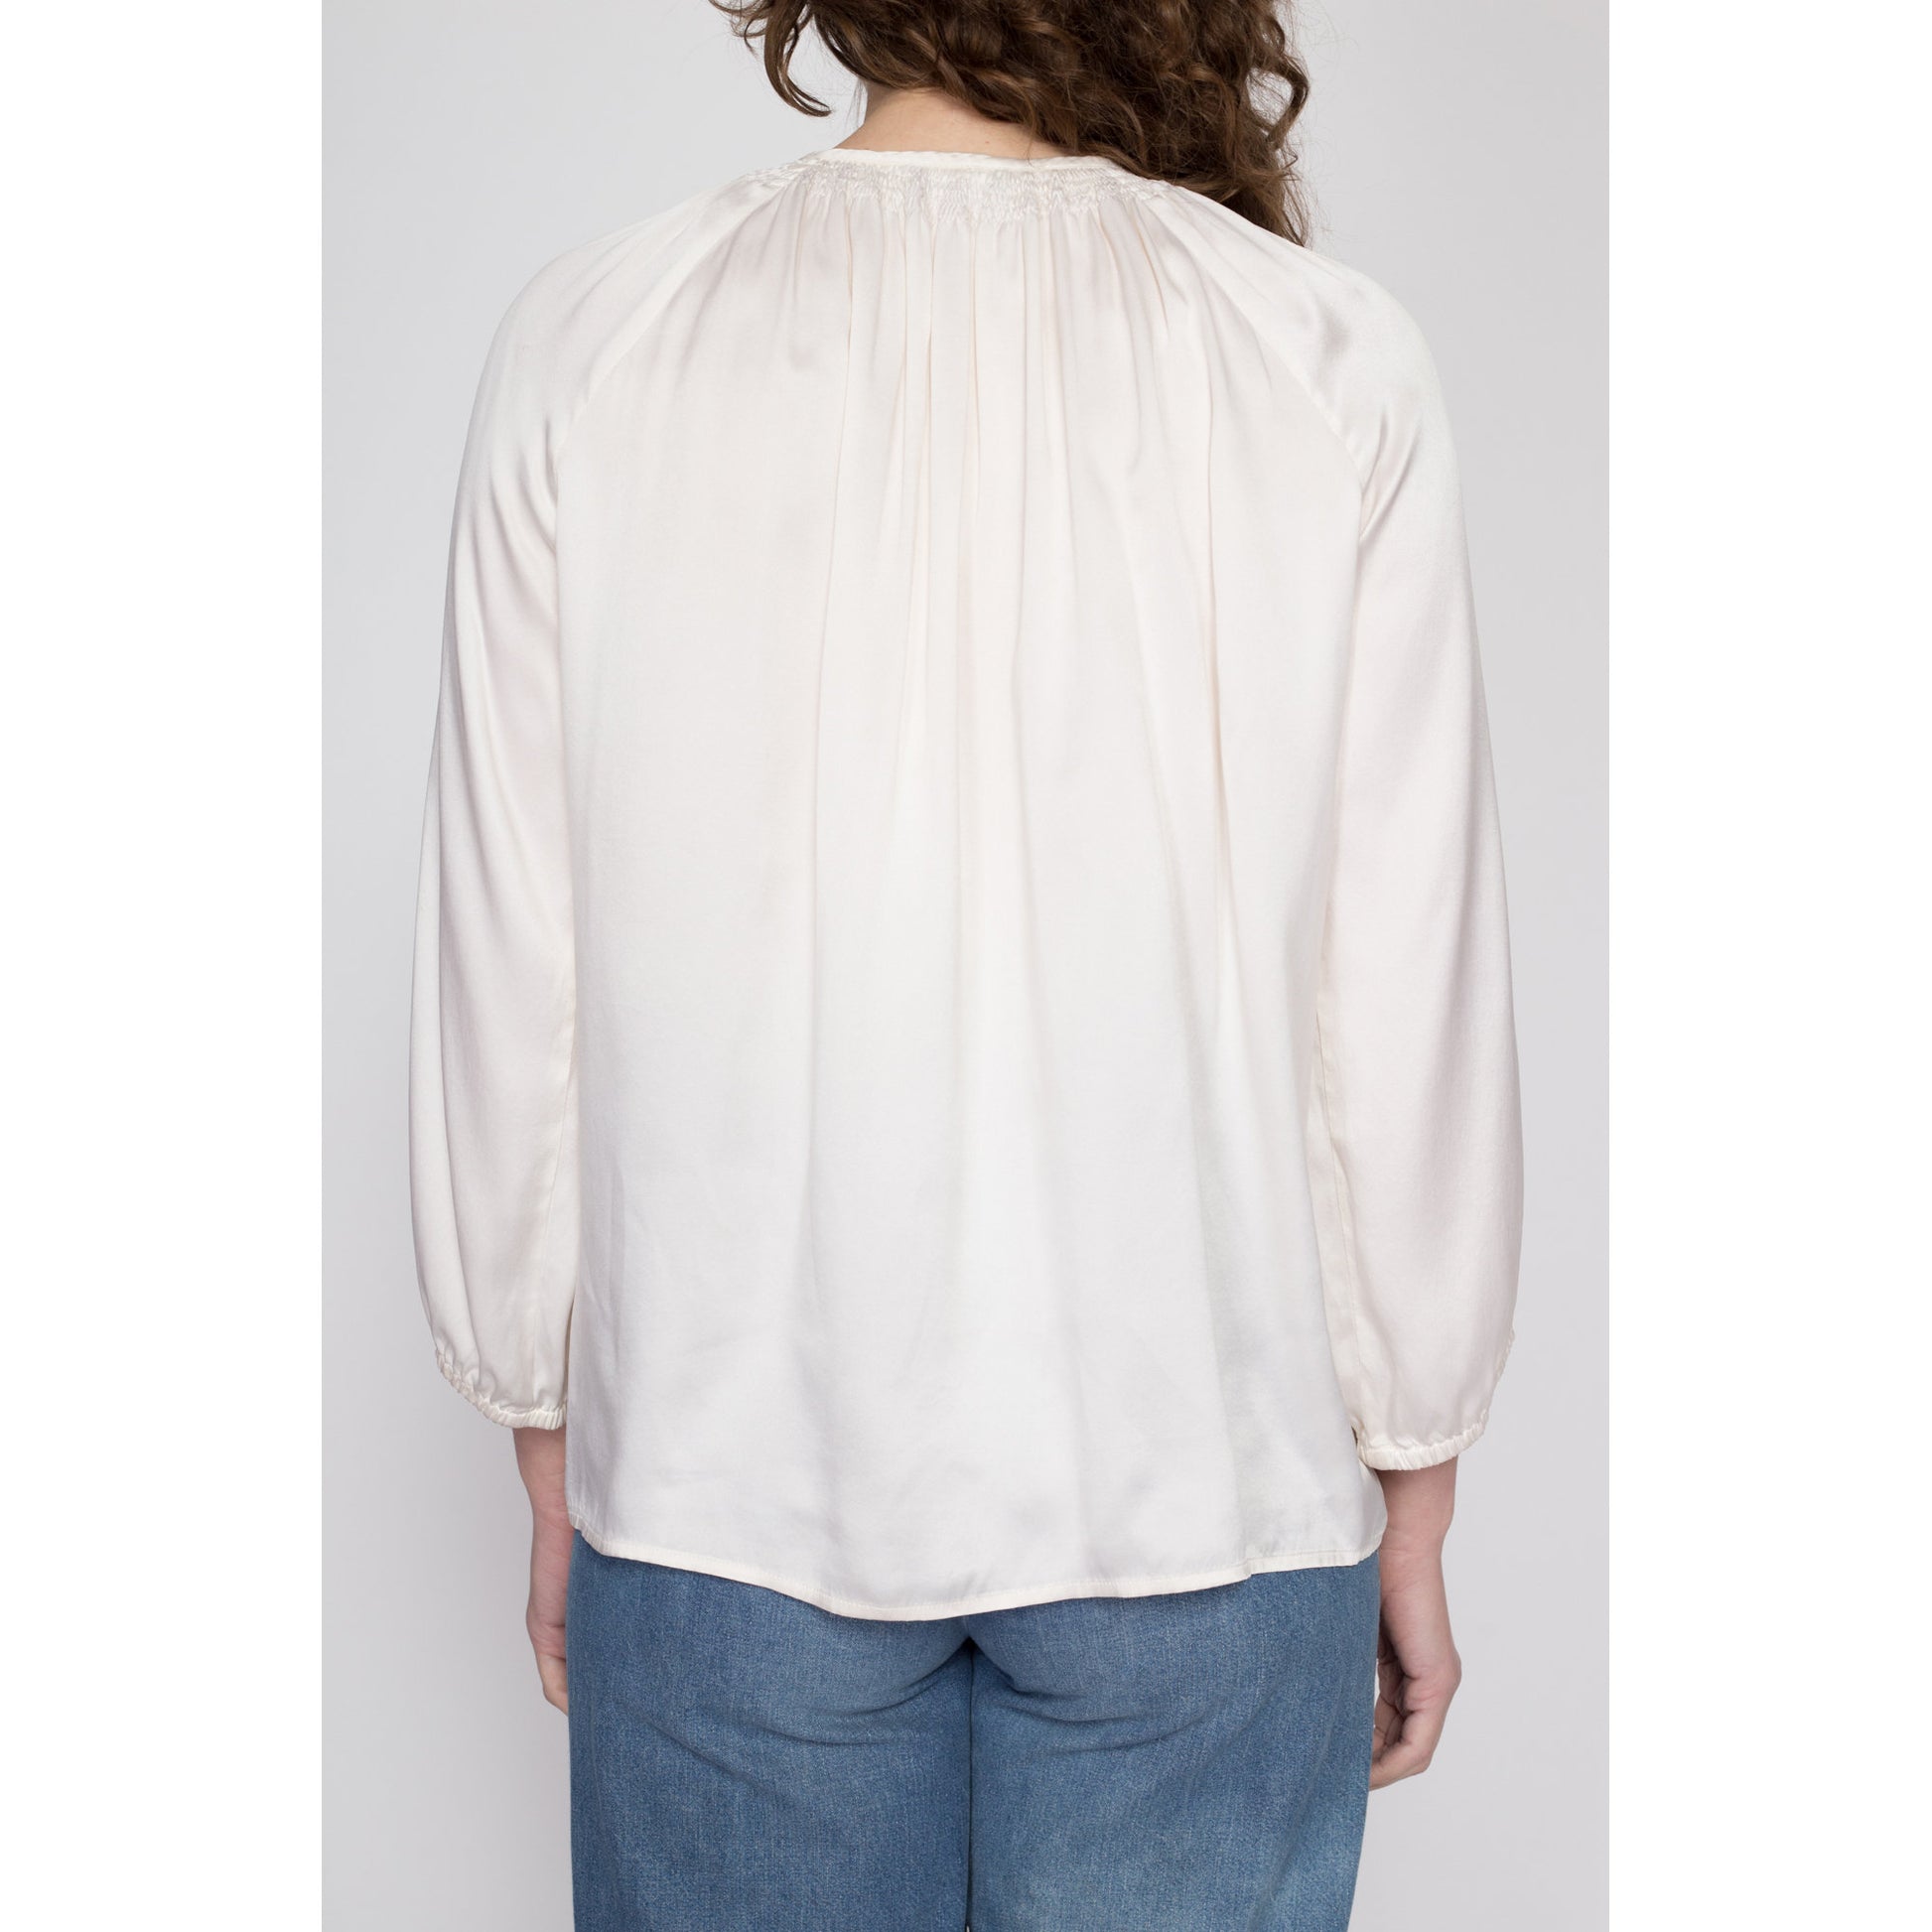 Medium 90s White Silk Folk Blouse | Vintage Boho 3/4 Sleeve Pleated Hippie Peasant Top